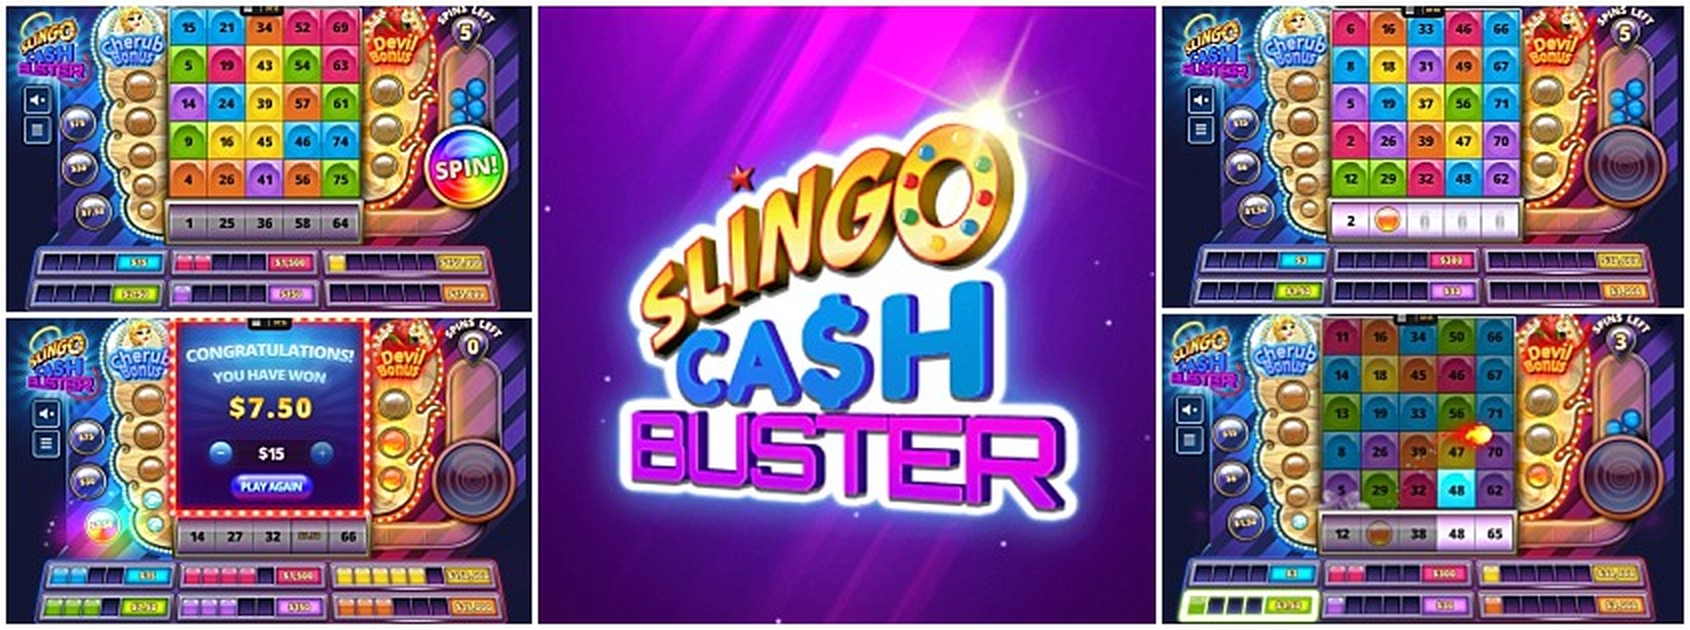 Slingo Cash Buster demo